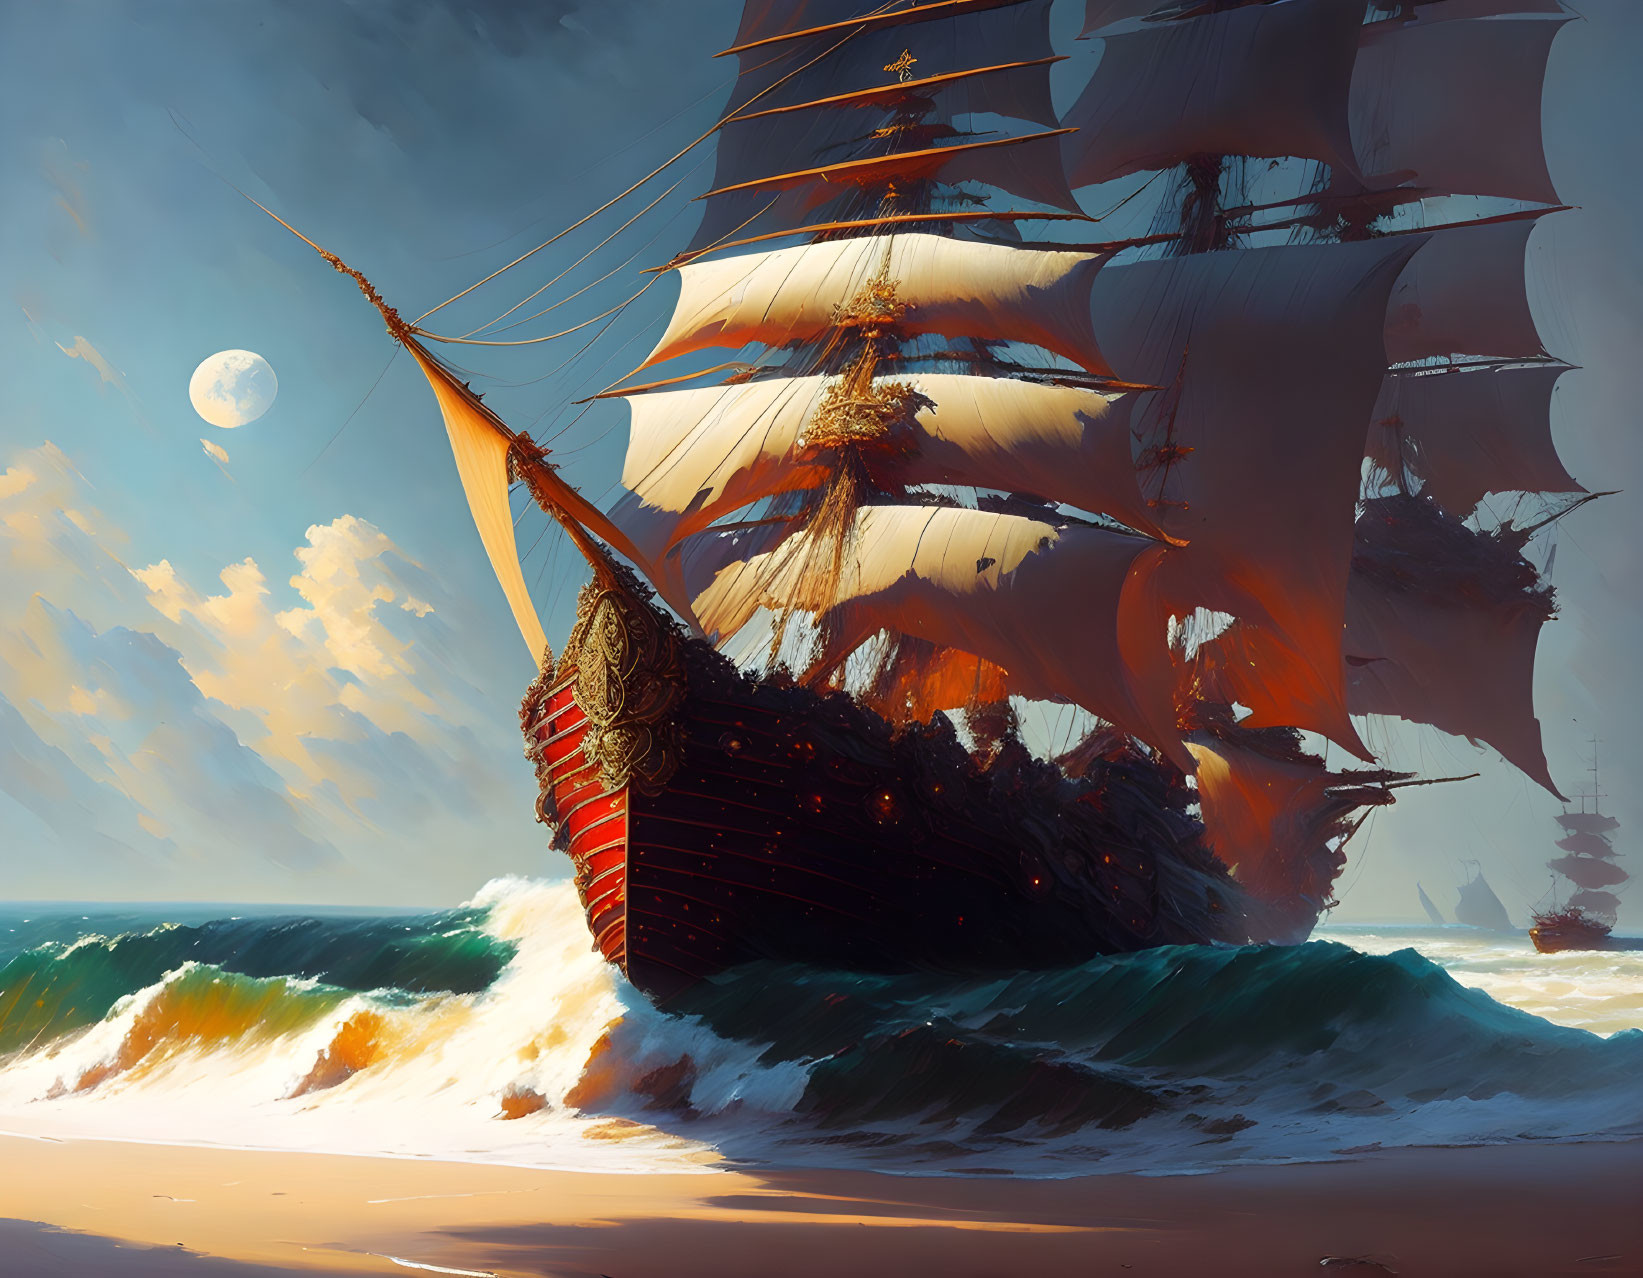 pirate ship crashes towards beach